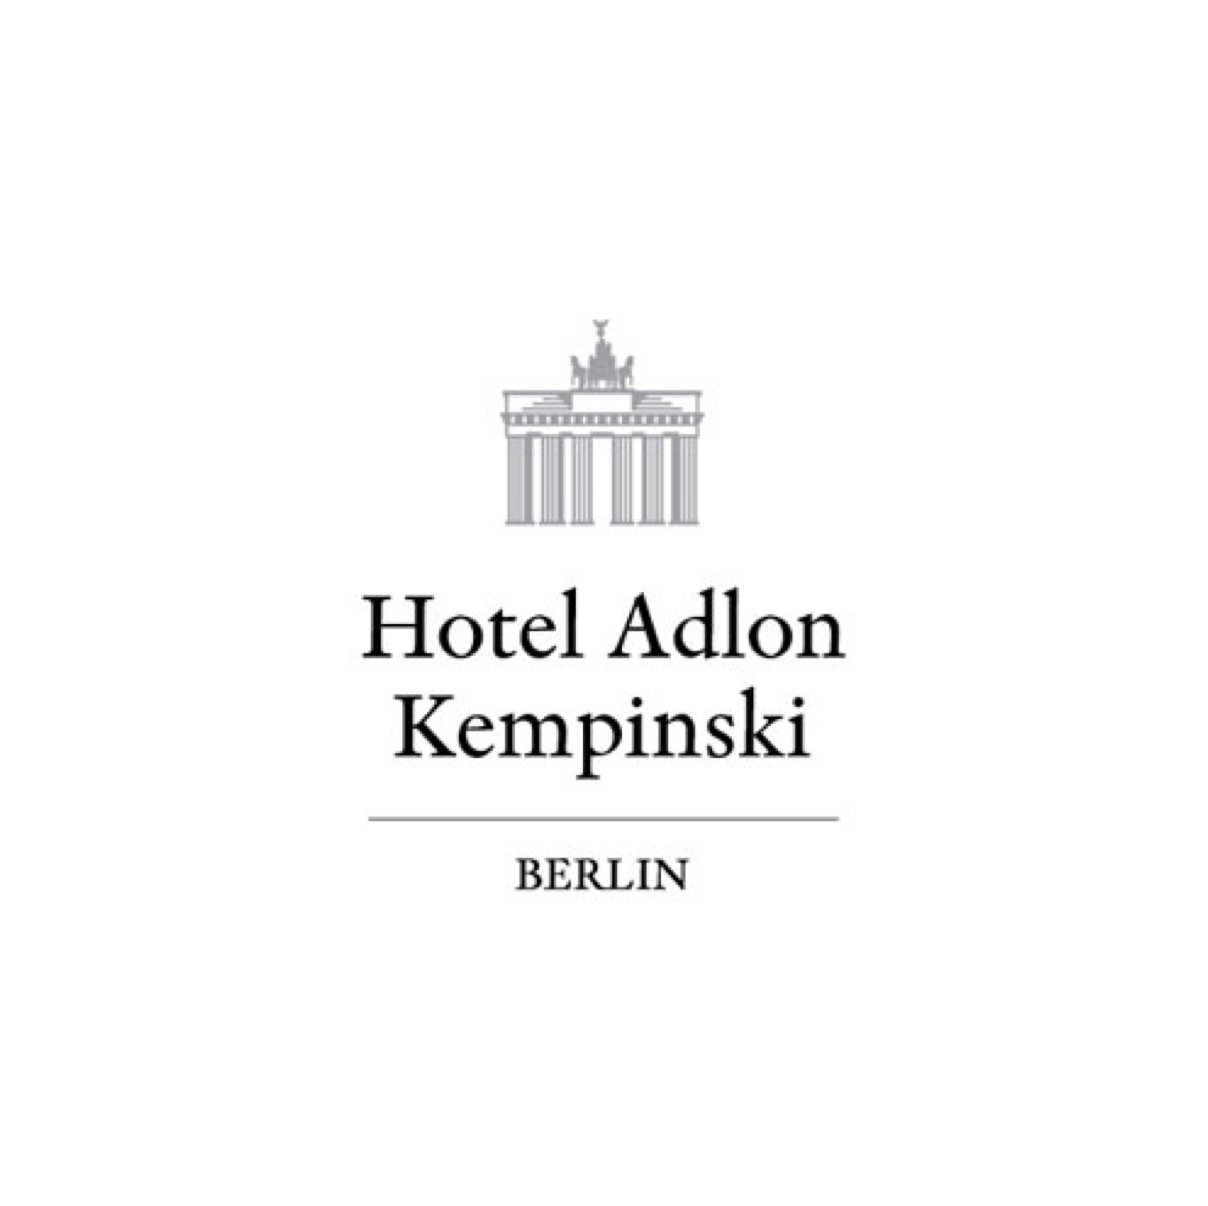 Logo Hotel Adlon Kempinski